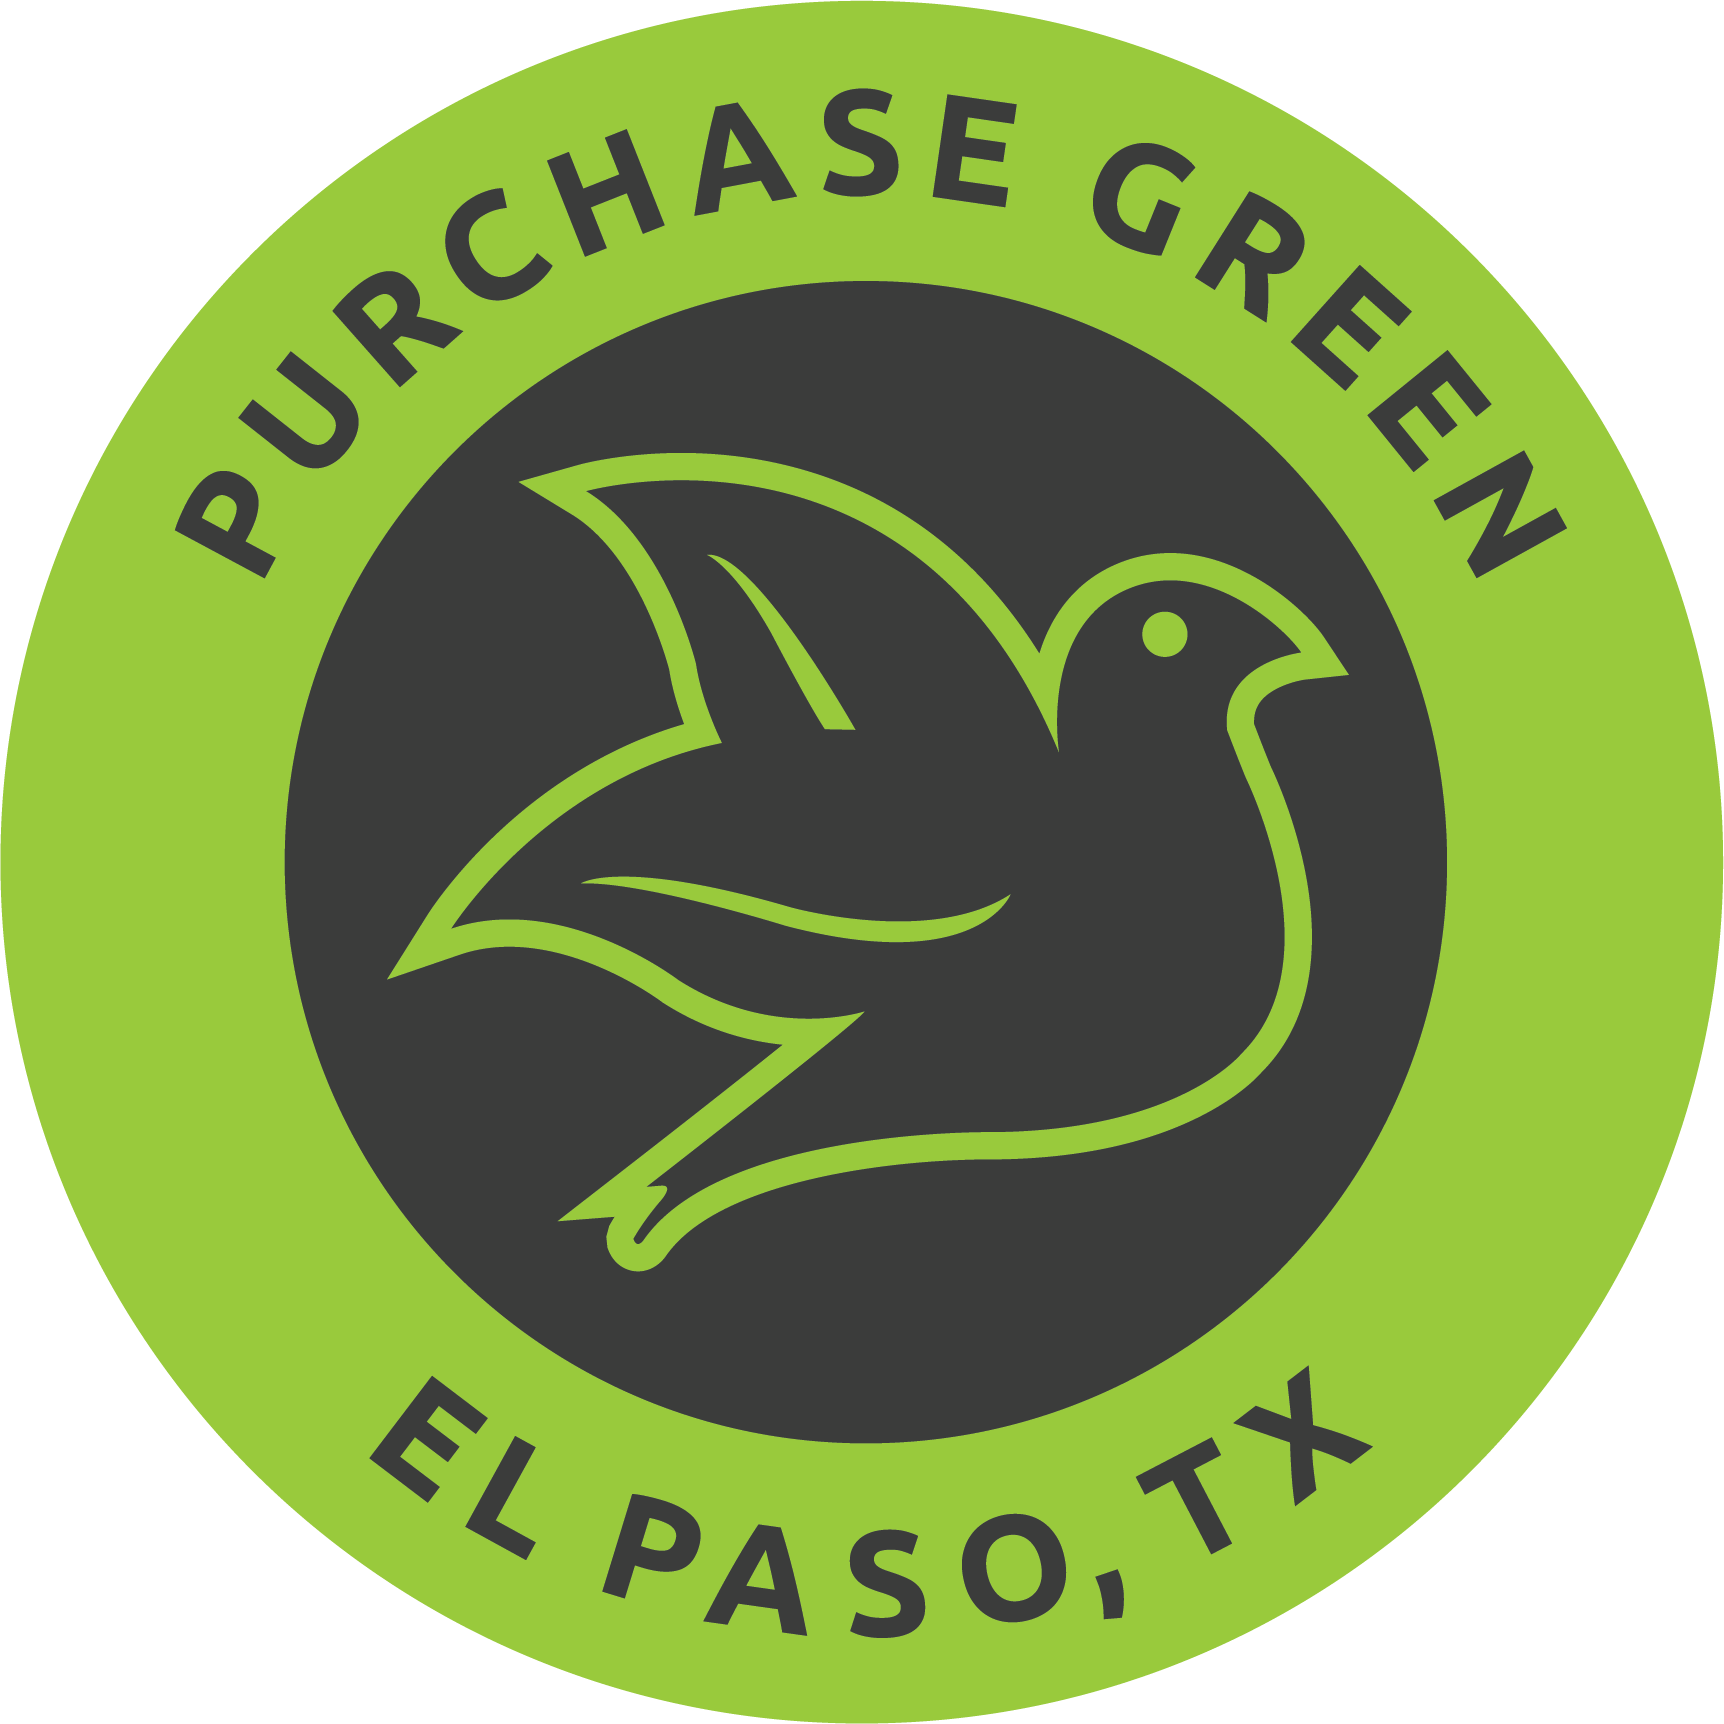 Purchase Green Artificial Grass - El Paso, TX 79922 - (915)308-0897 | ShowMeLocal.com